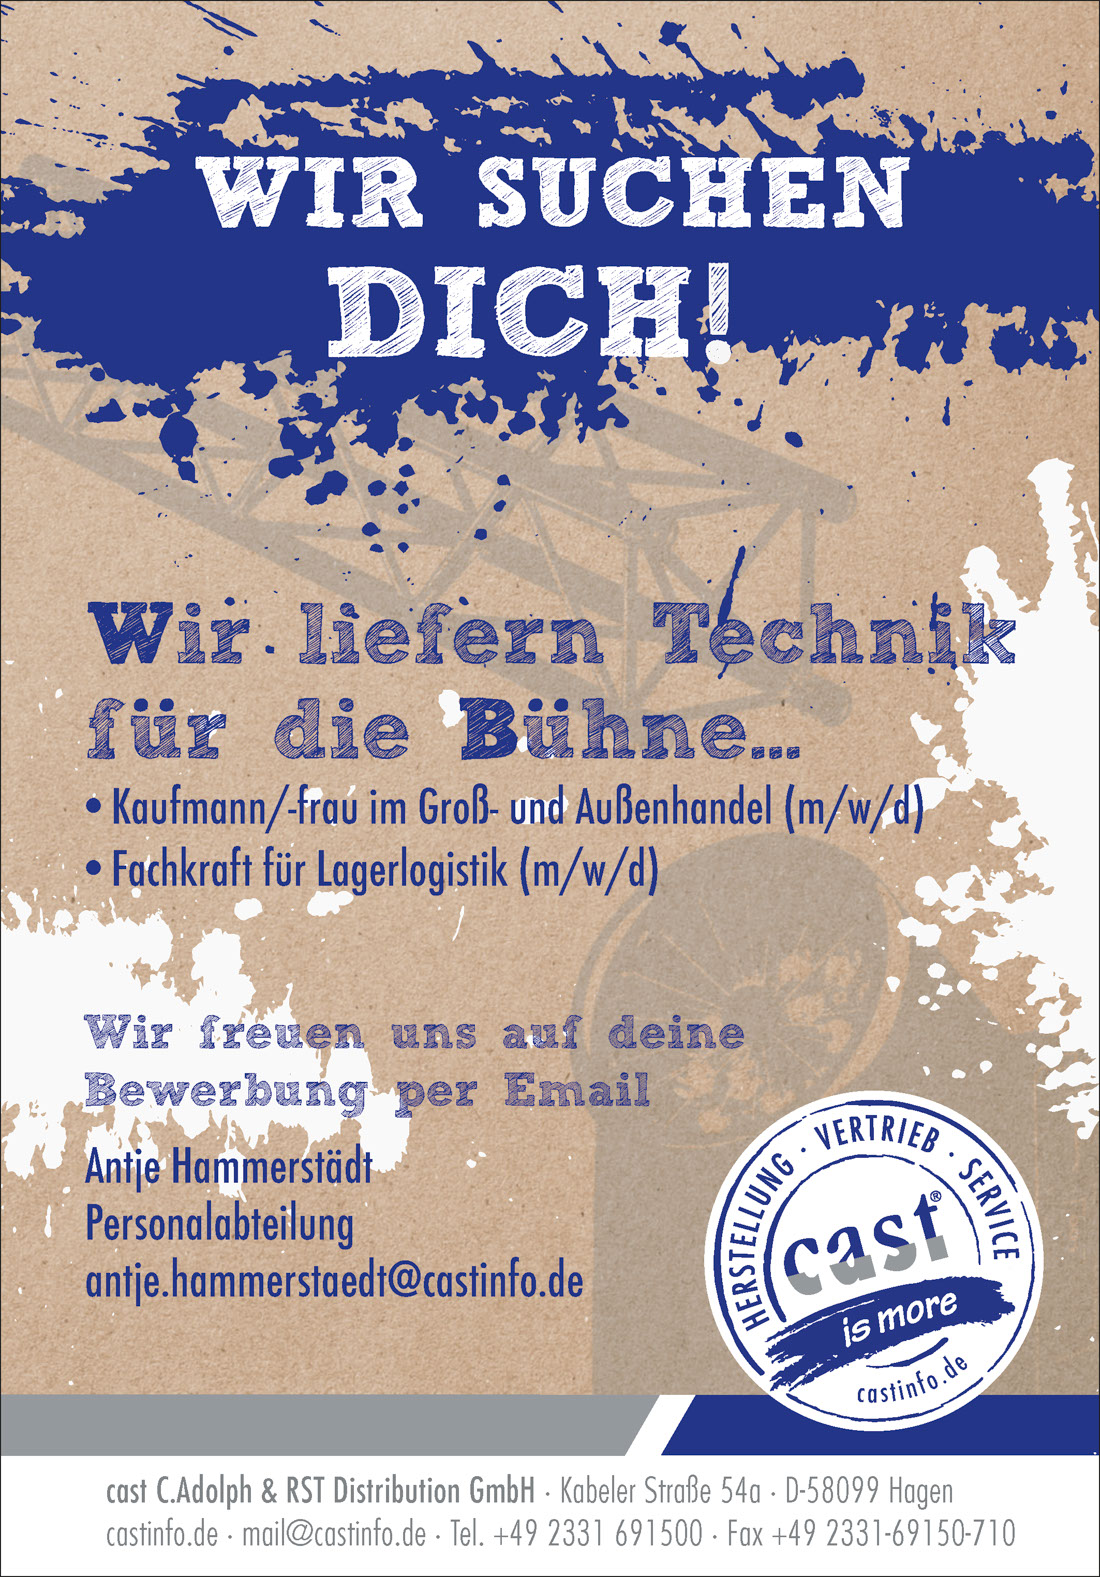 cast C.Adolph & RST Distribution GmbH